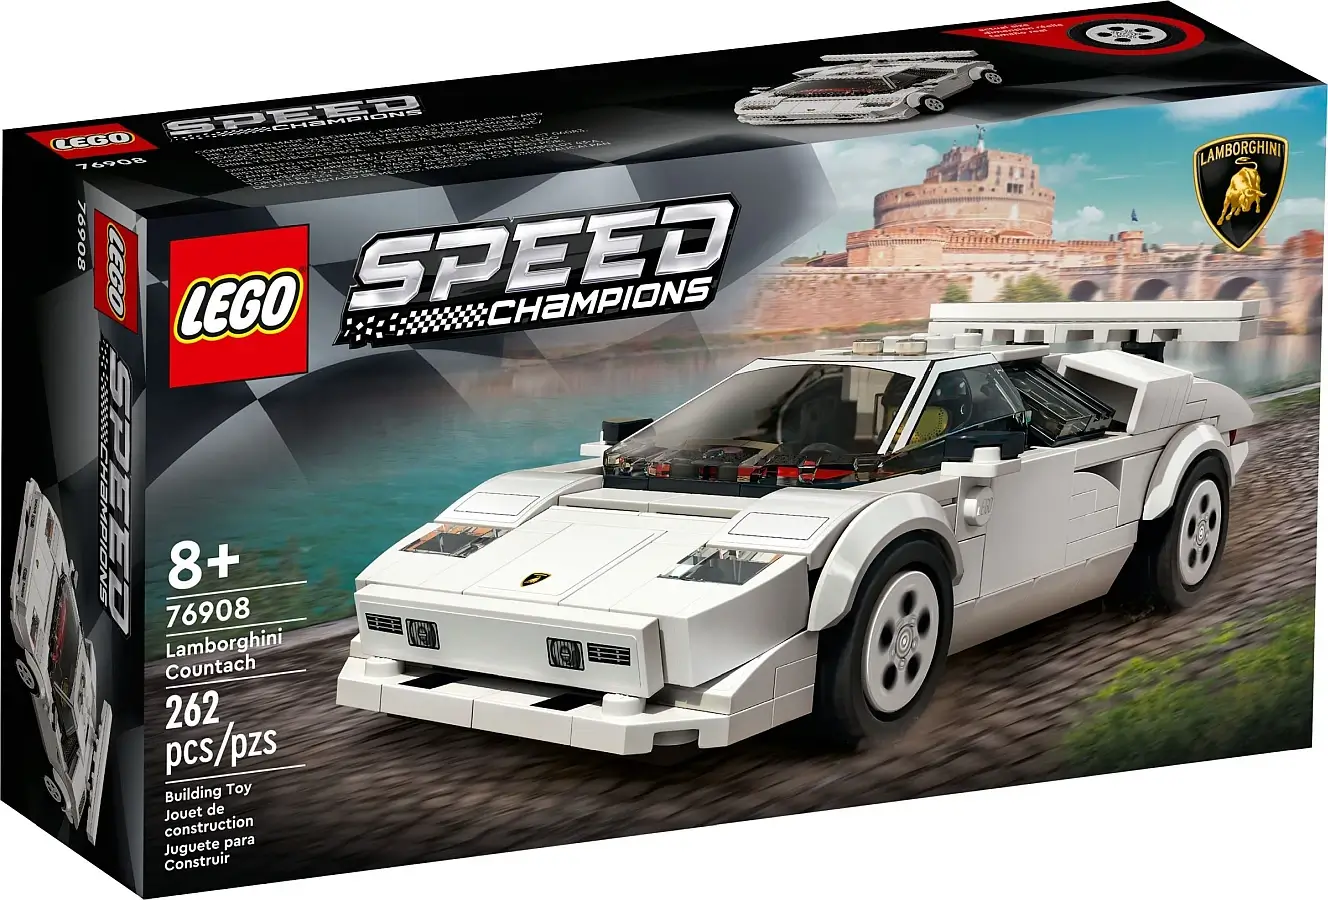 Pudełko zestawu 76908 z serii LEGO® Speed Champions – Lamborghini Countach